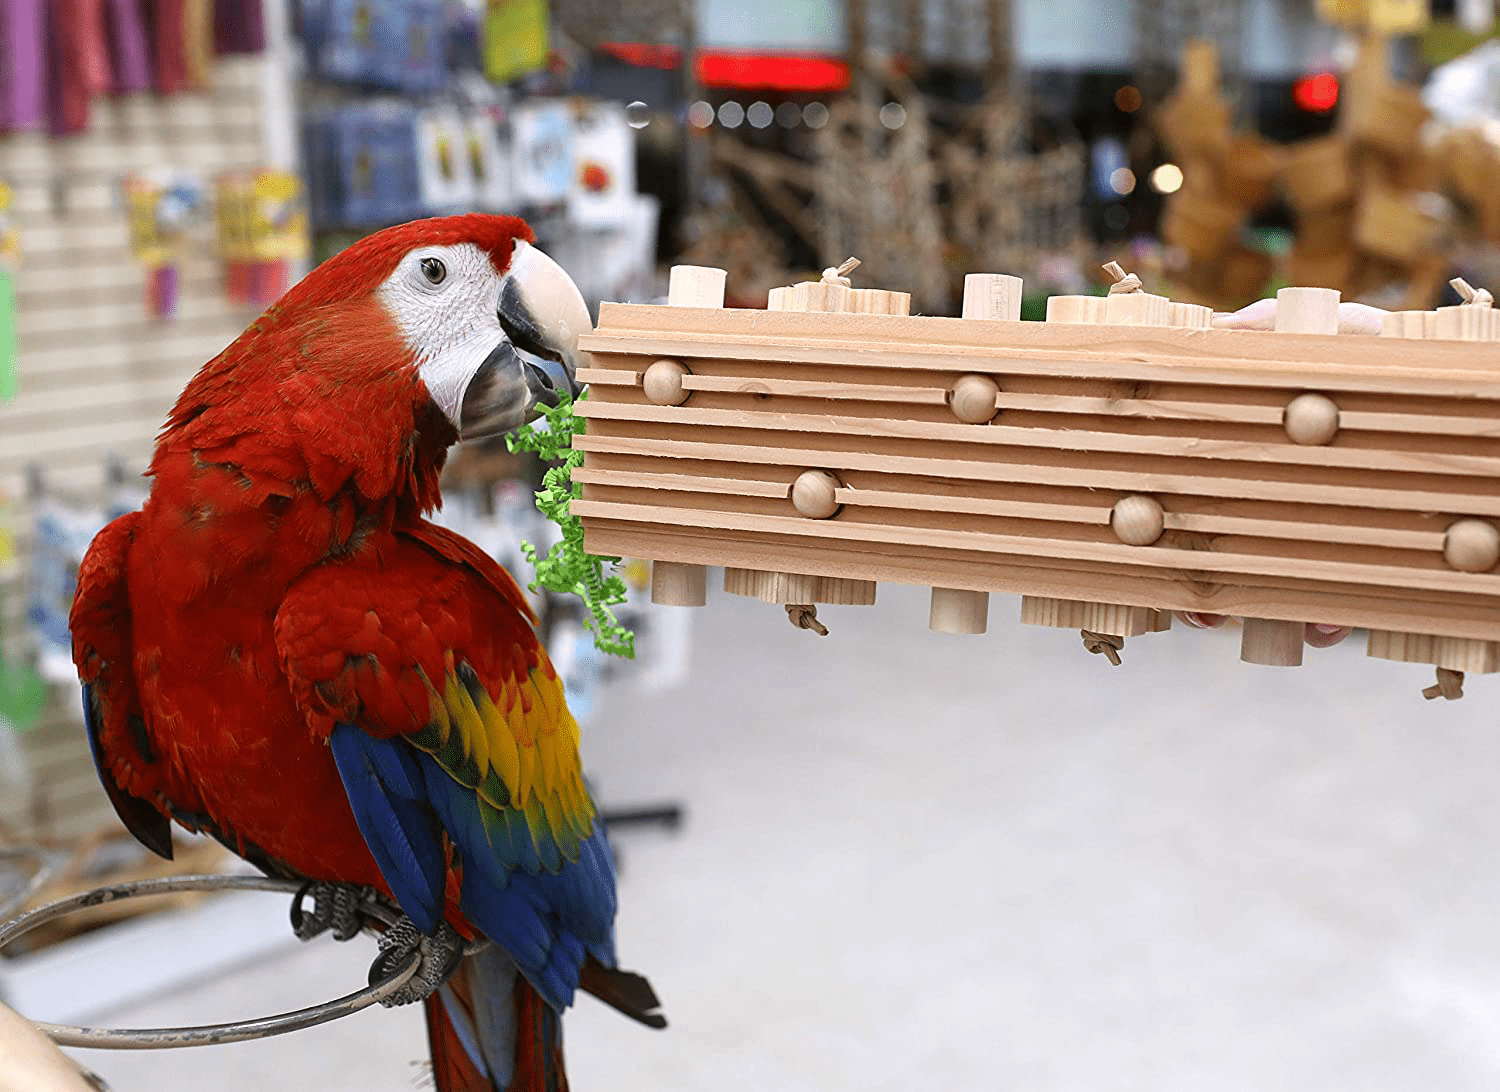 Activity Block - Large Parrot Toy